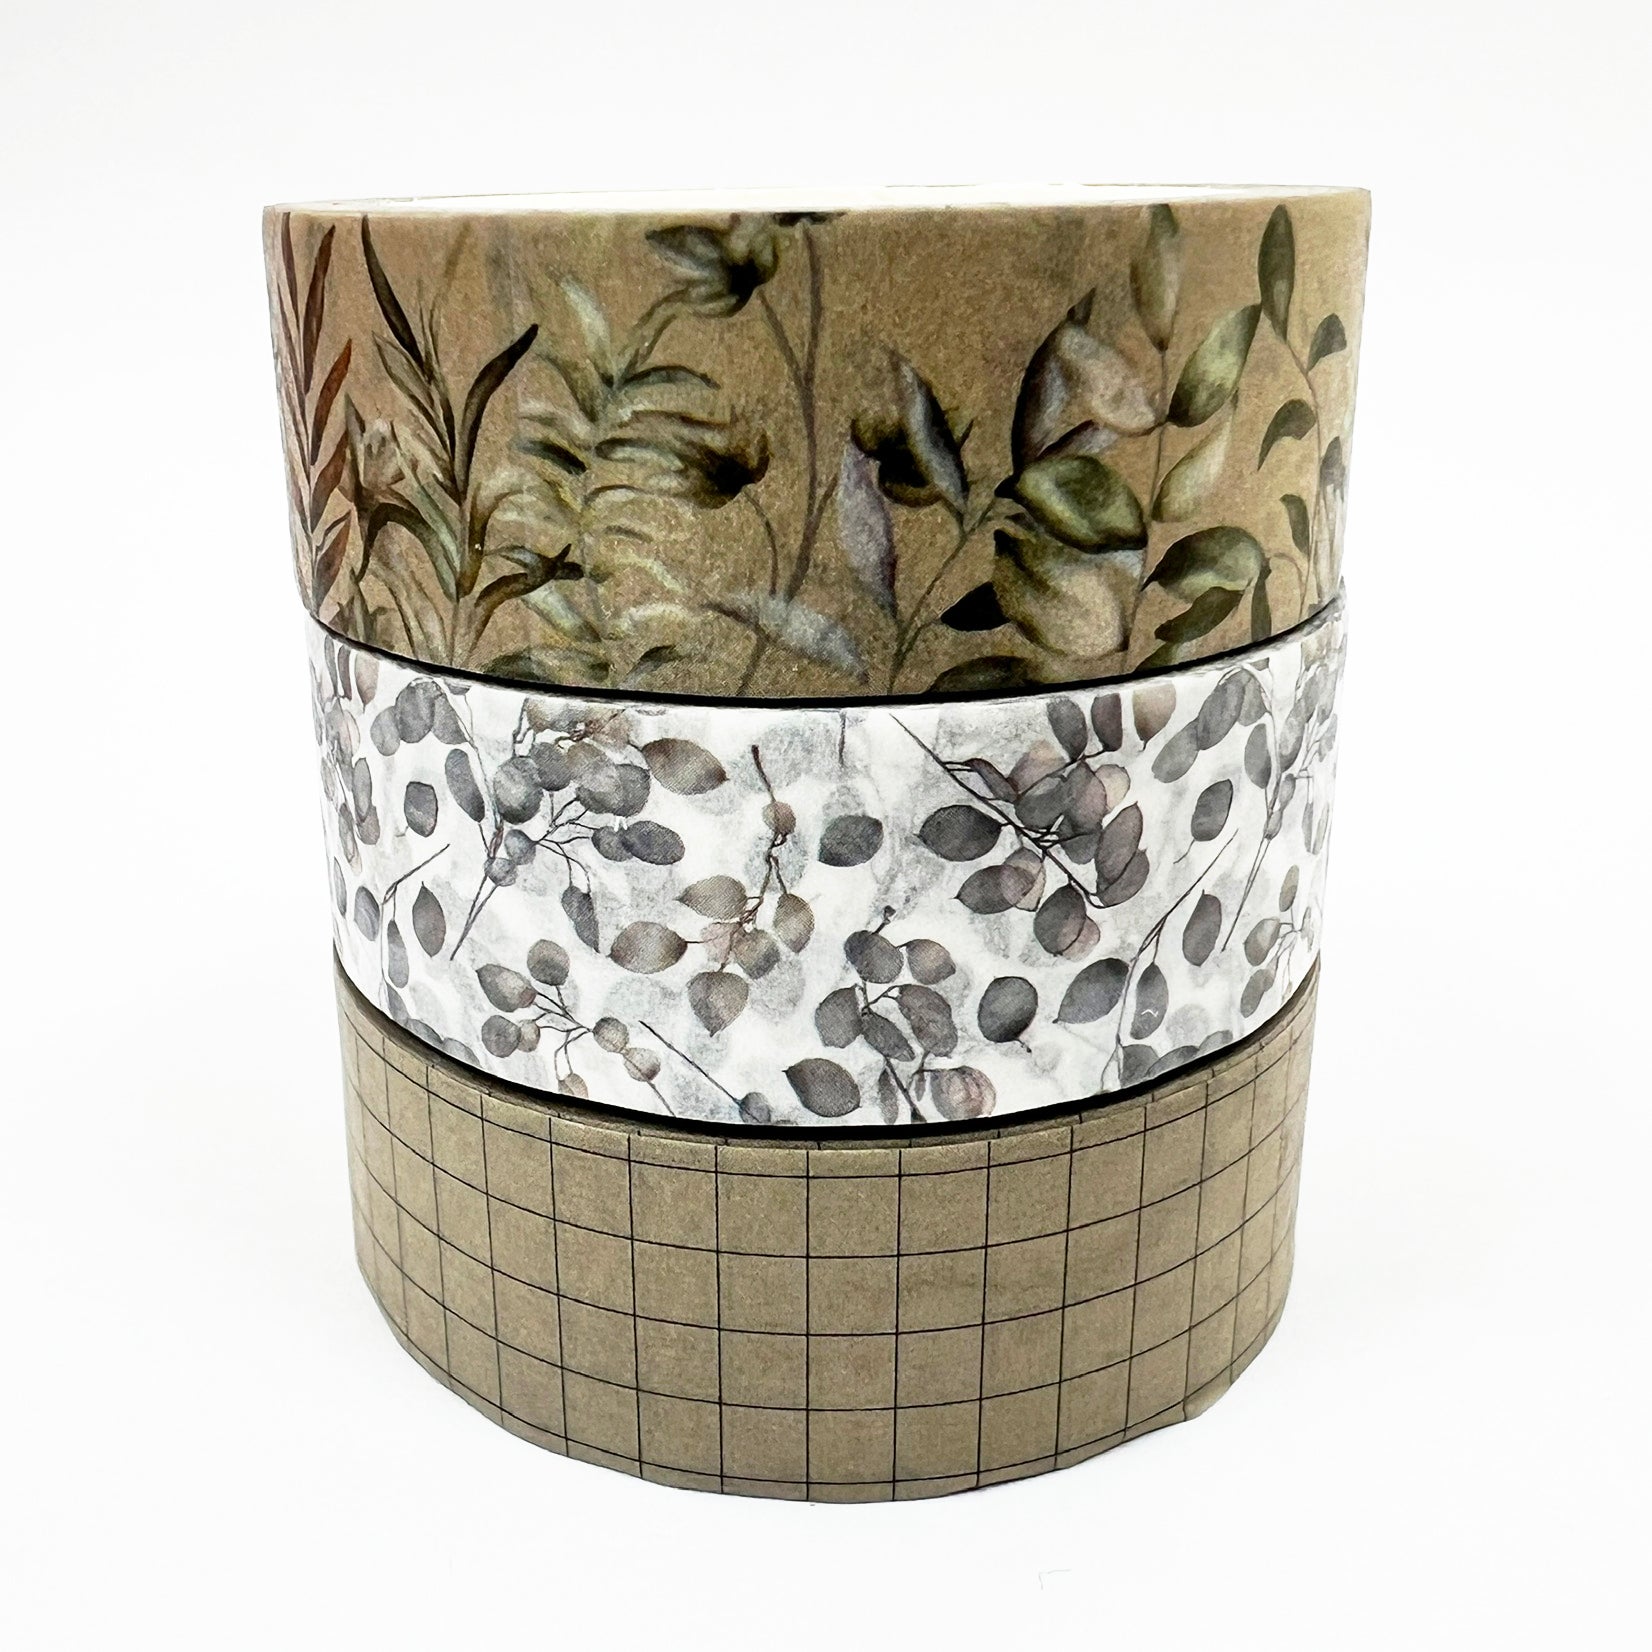 Foliage & Grid Washi Tape | Set Of Three | 15mm x 10m | Journalling Scrapbook Planner - SweetpeaStore